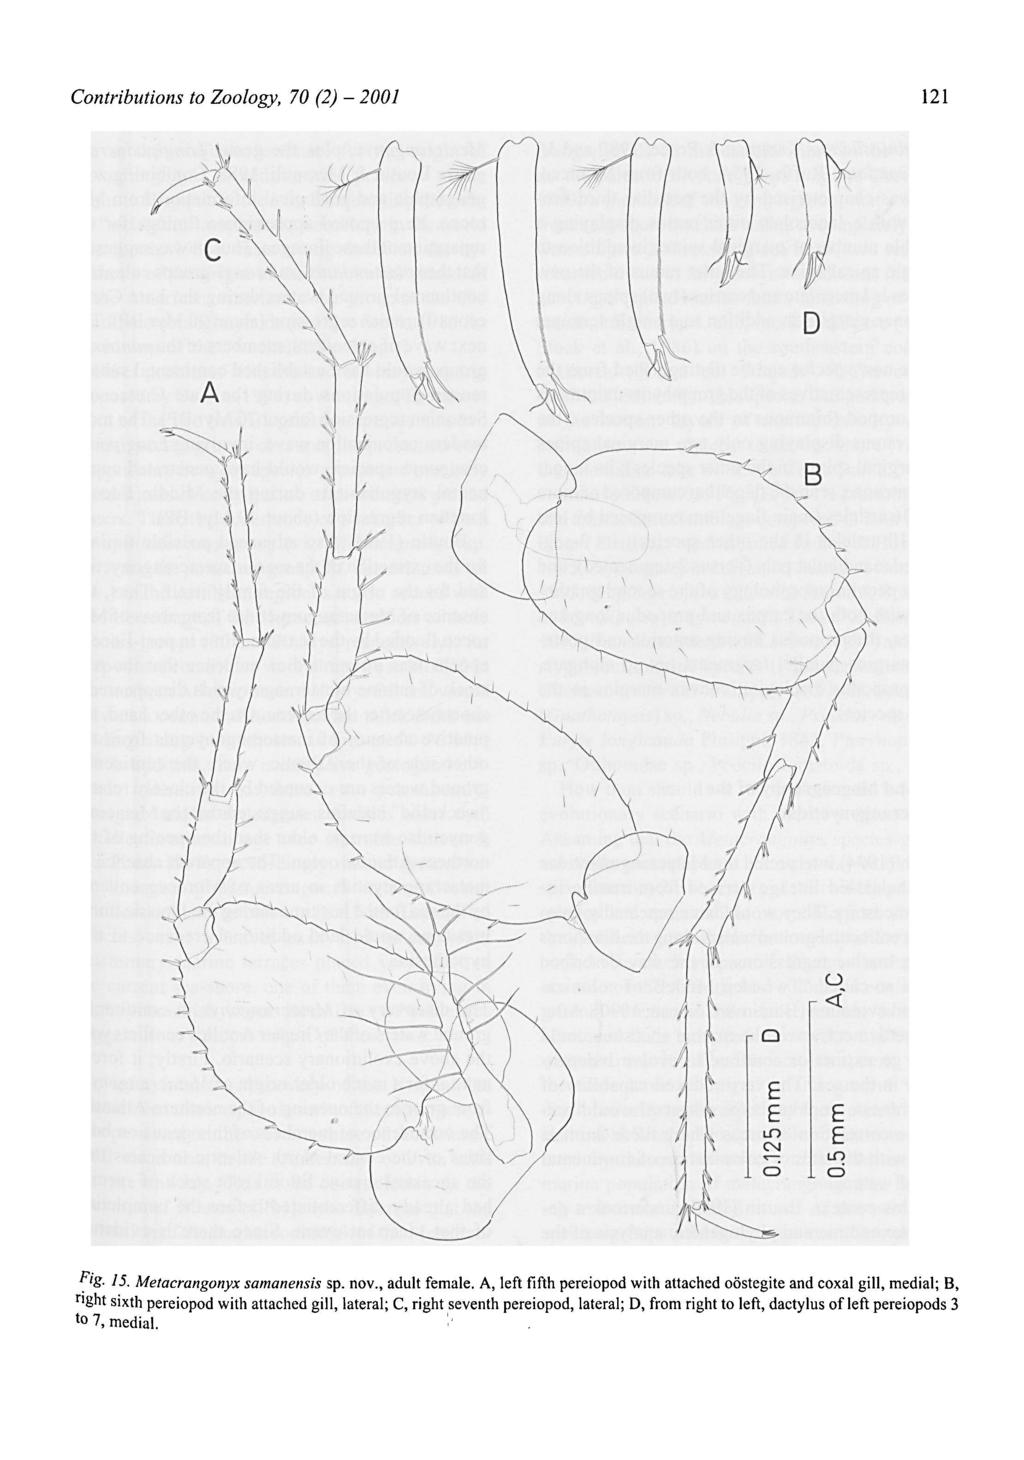 2001 Contributions to Zoology, 70 (2) - 121 Fig- 15. Metacrangonyx samanensis sp. nov., adult female.